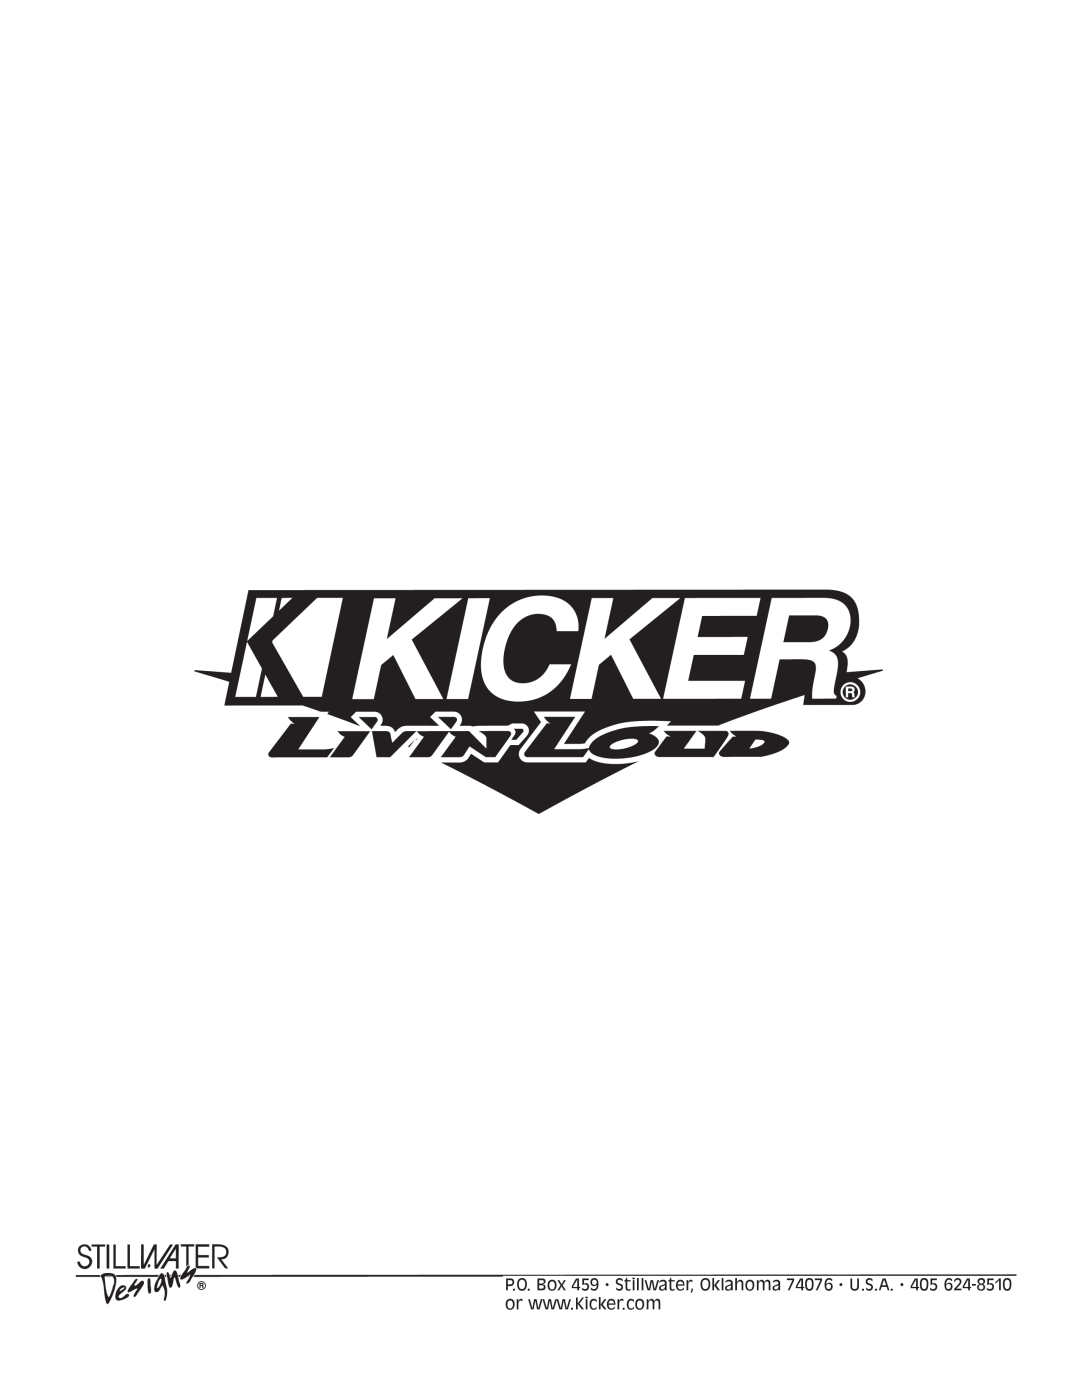 Kicker KX200.4 technical manual 